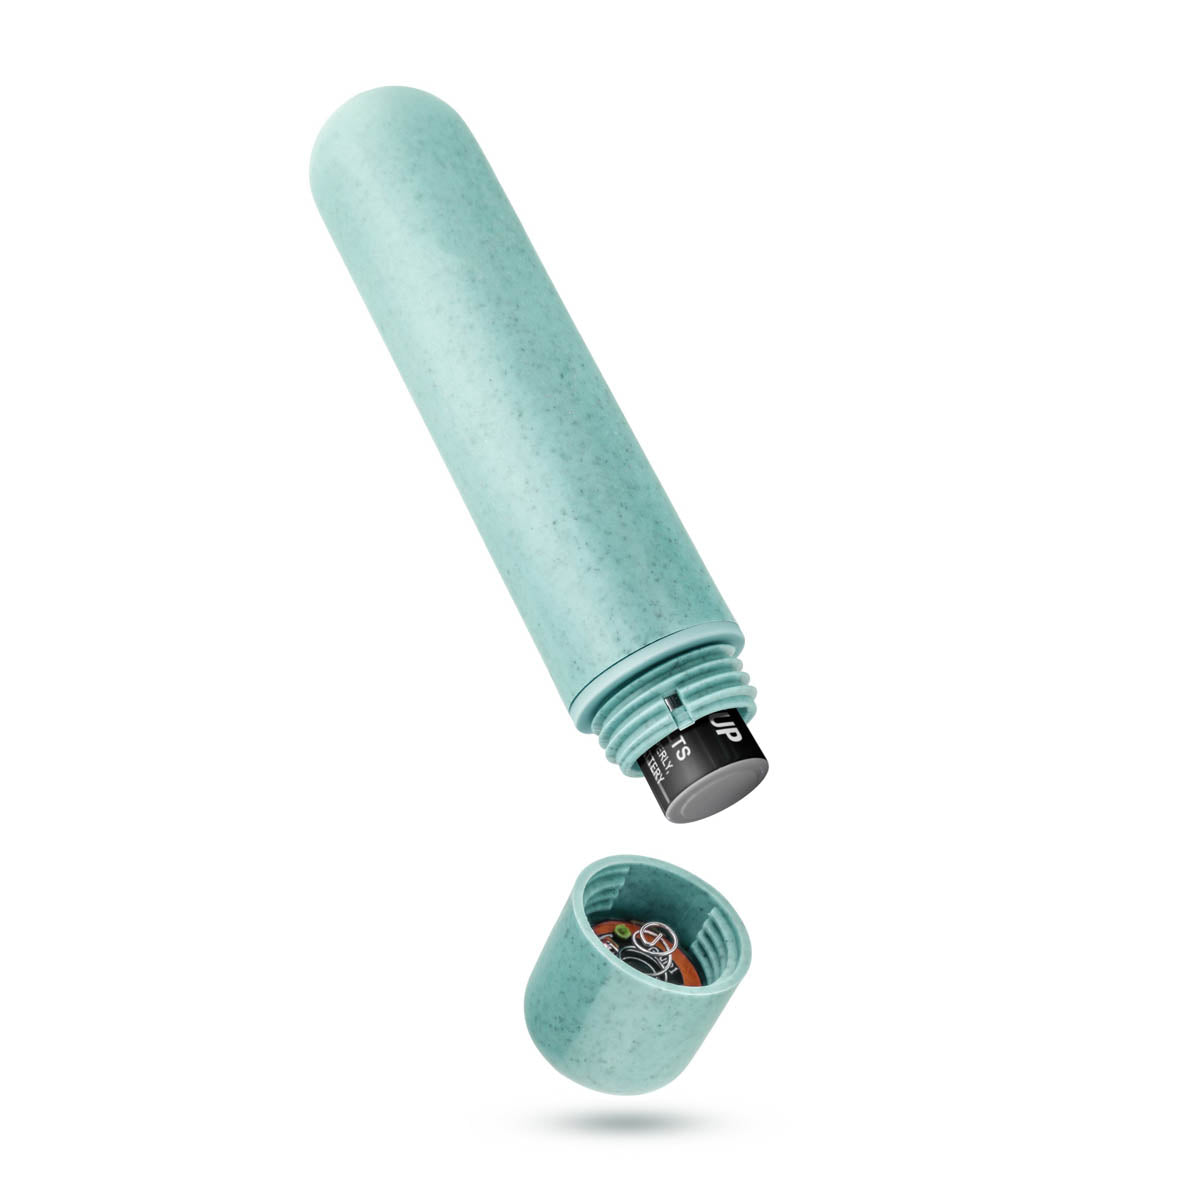 Gaia Biodegradable Eco Bullet Vibrator Blue